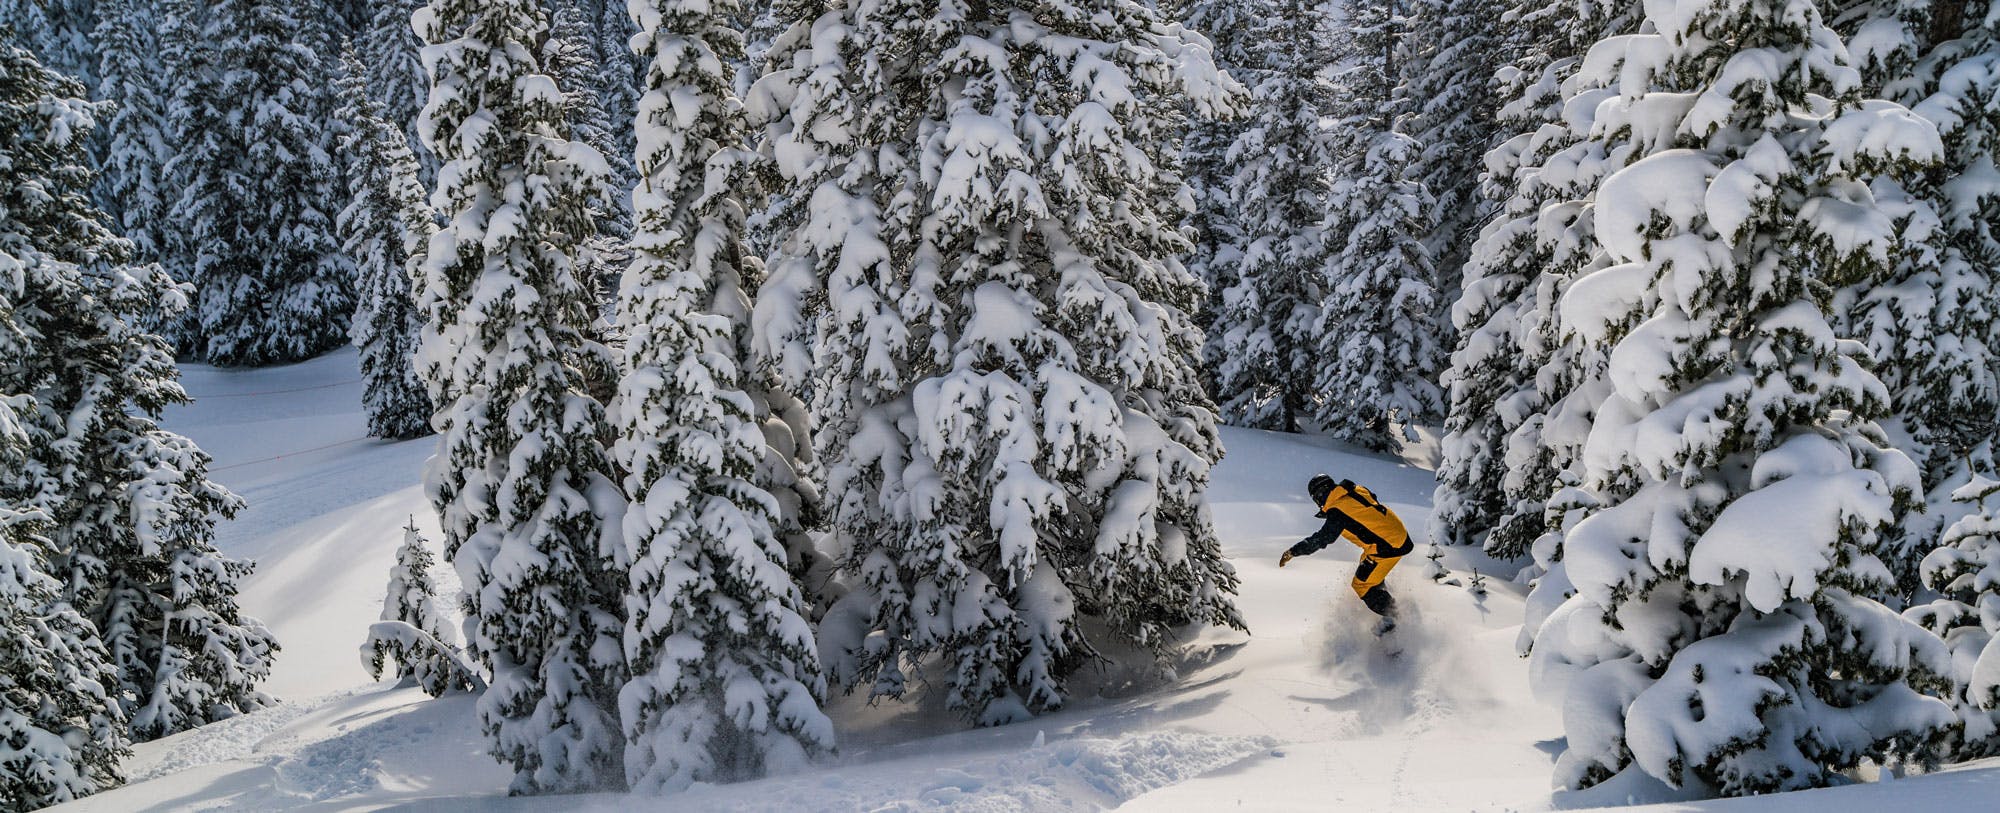 4 Pro Models for the Best Snowboarding Kit